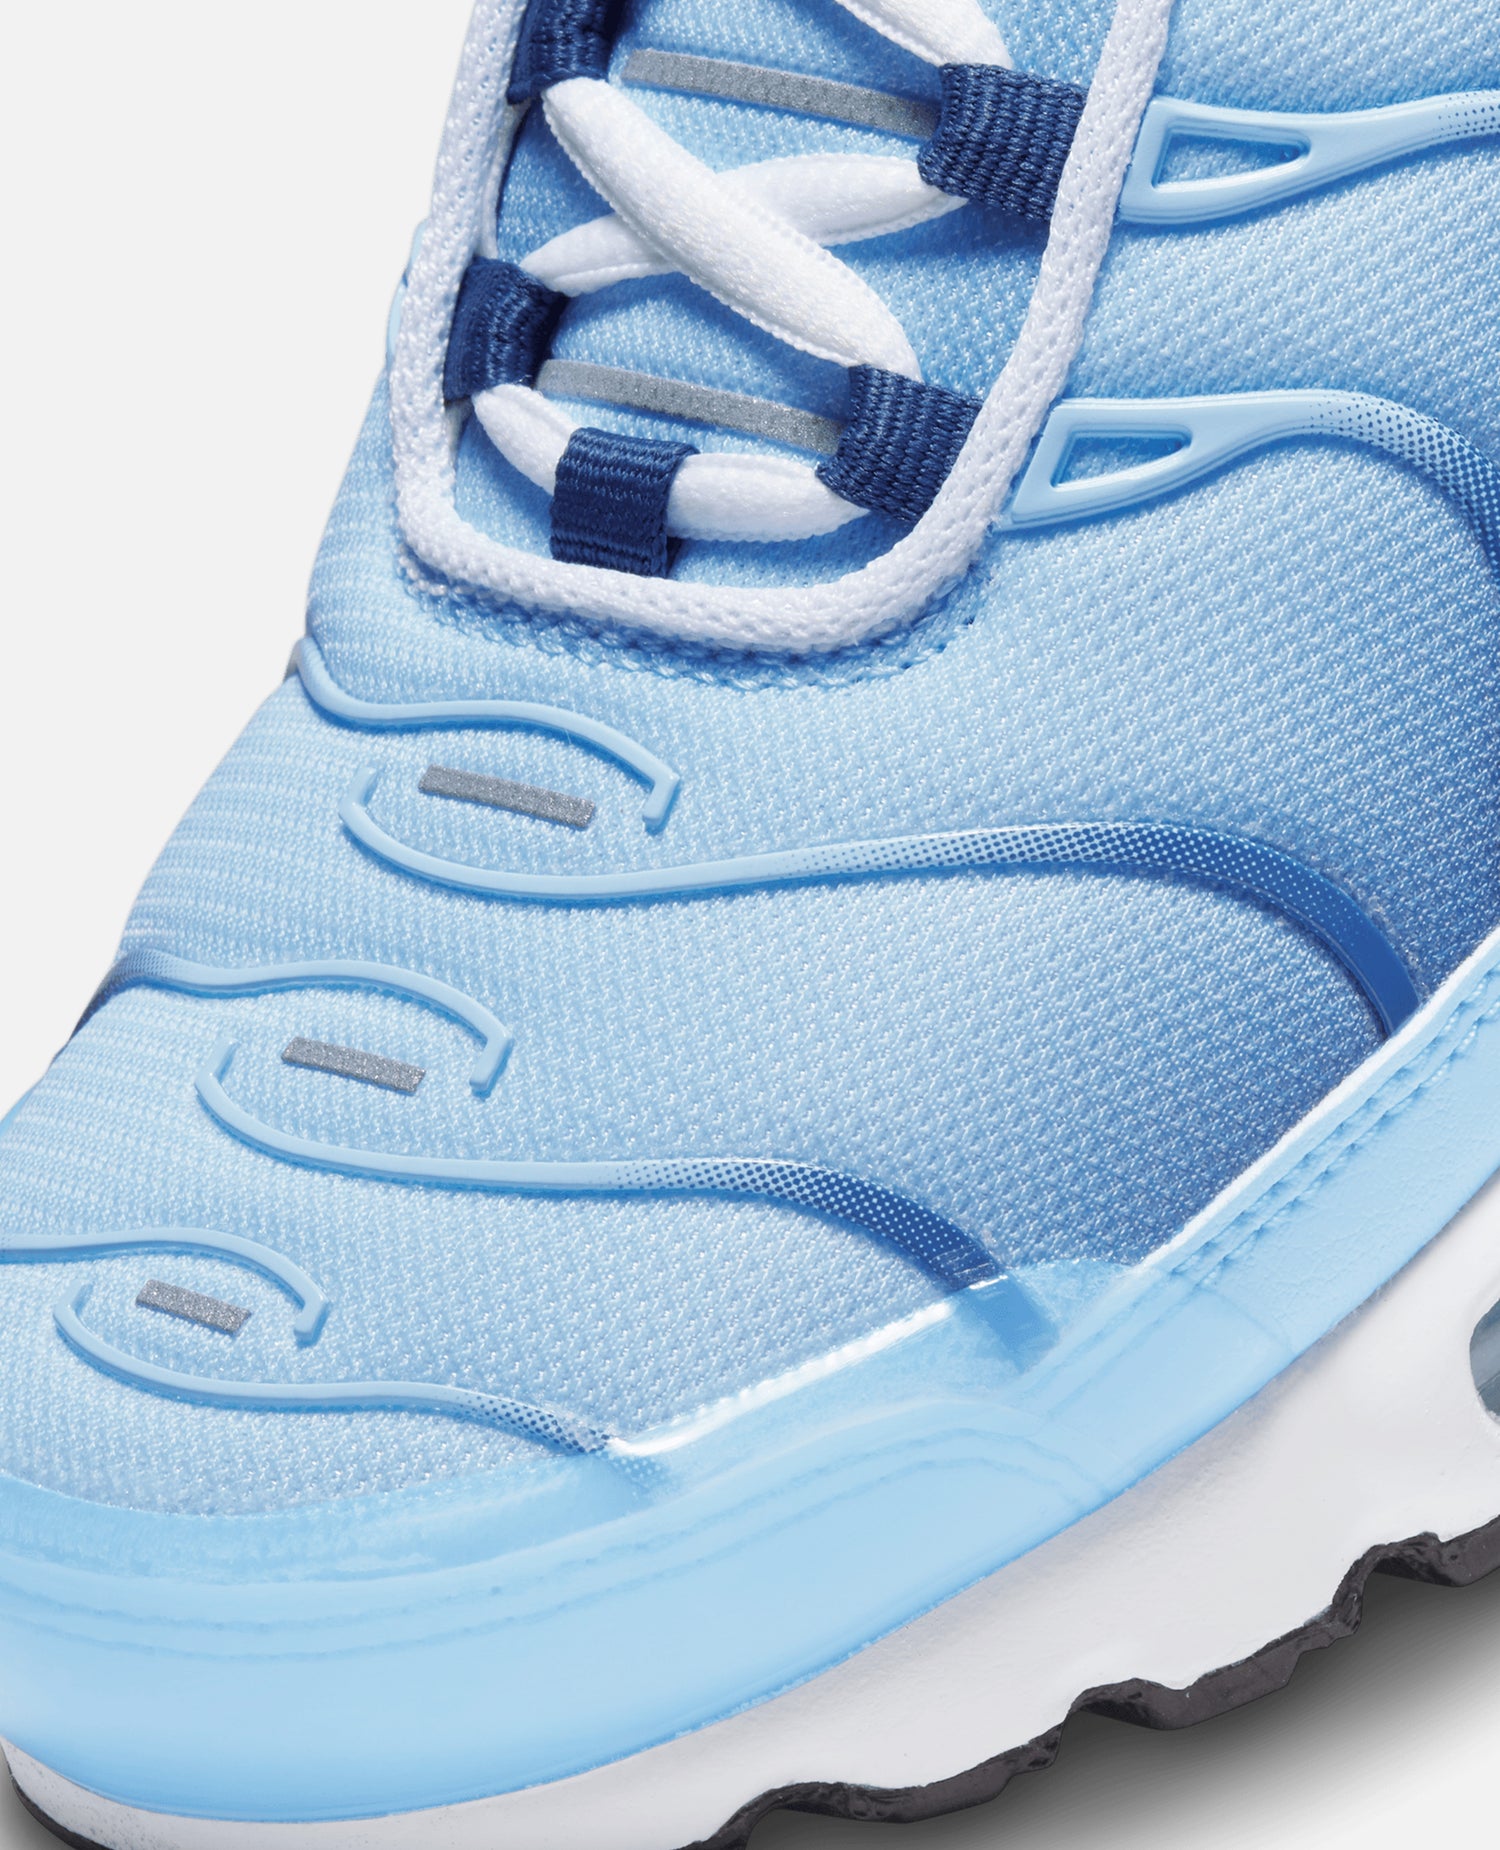 WMNS Nike AIR Max Plus (Maui/Celestine Blue-Diffused Blue)